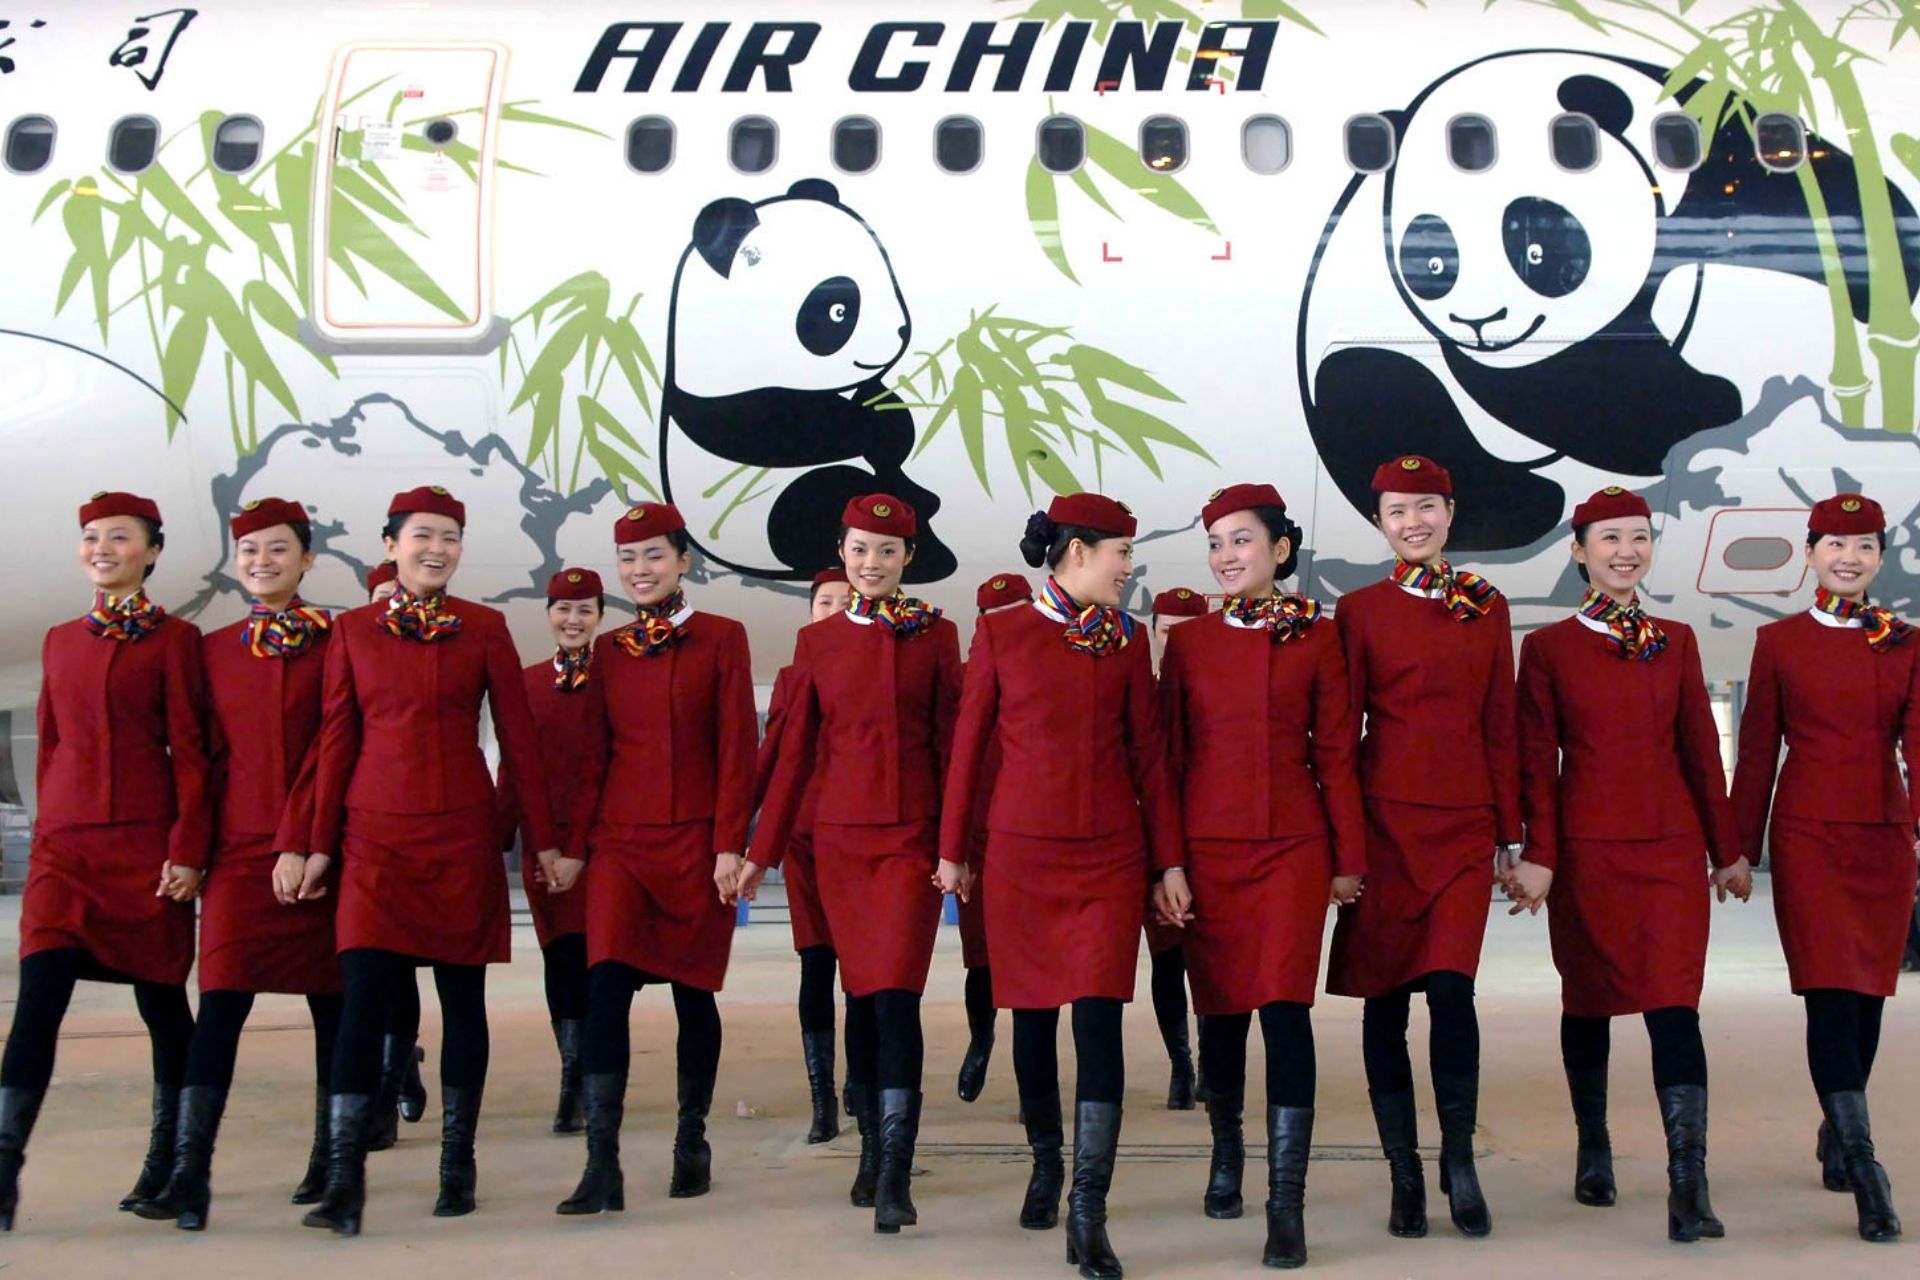 AIR CHINA crew